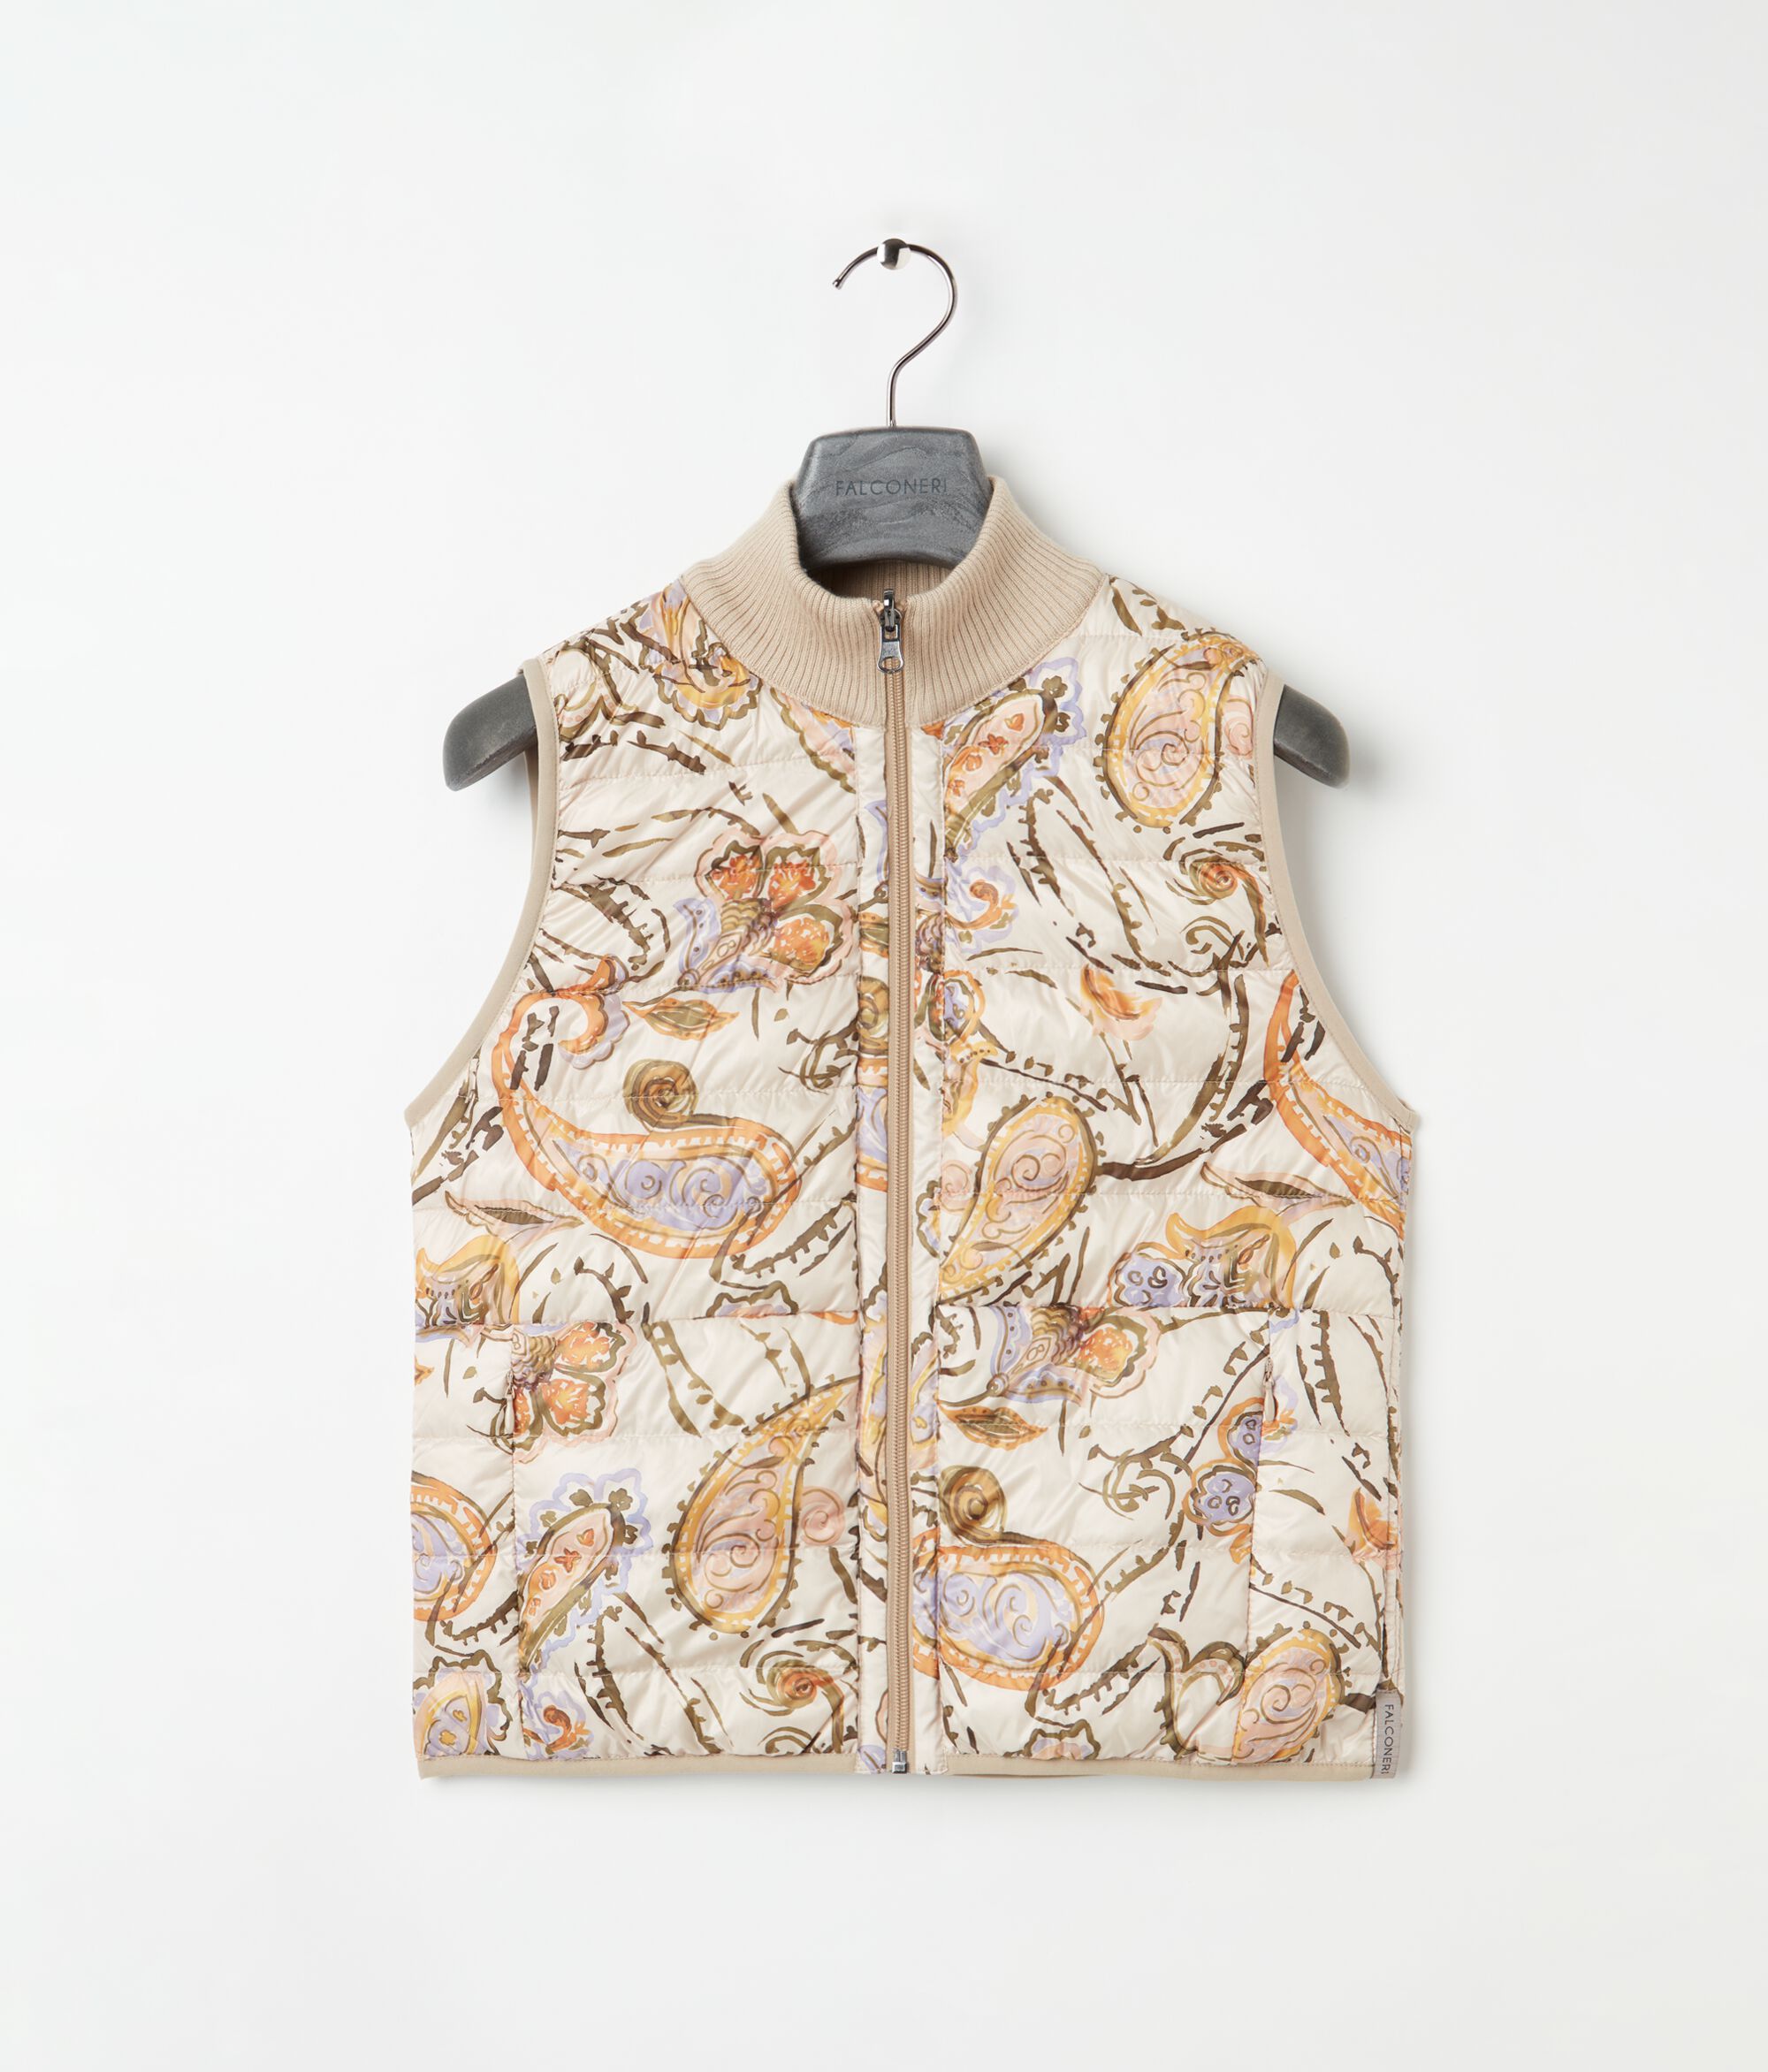 Falconeri Woman's Sleeveless Print Jacket